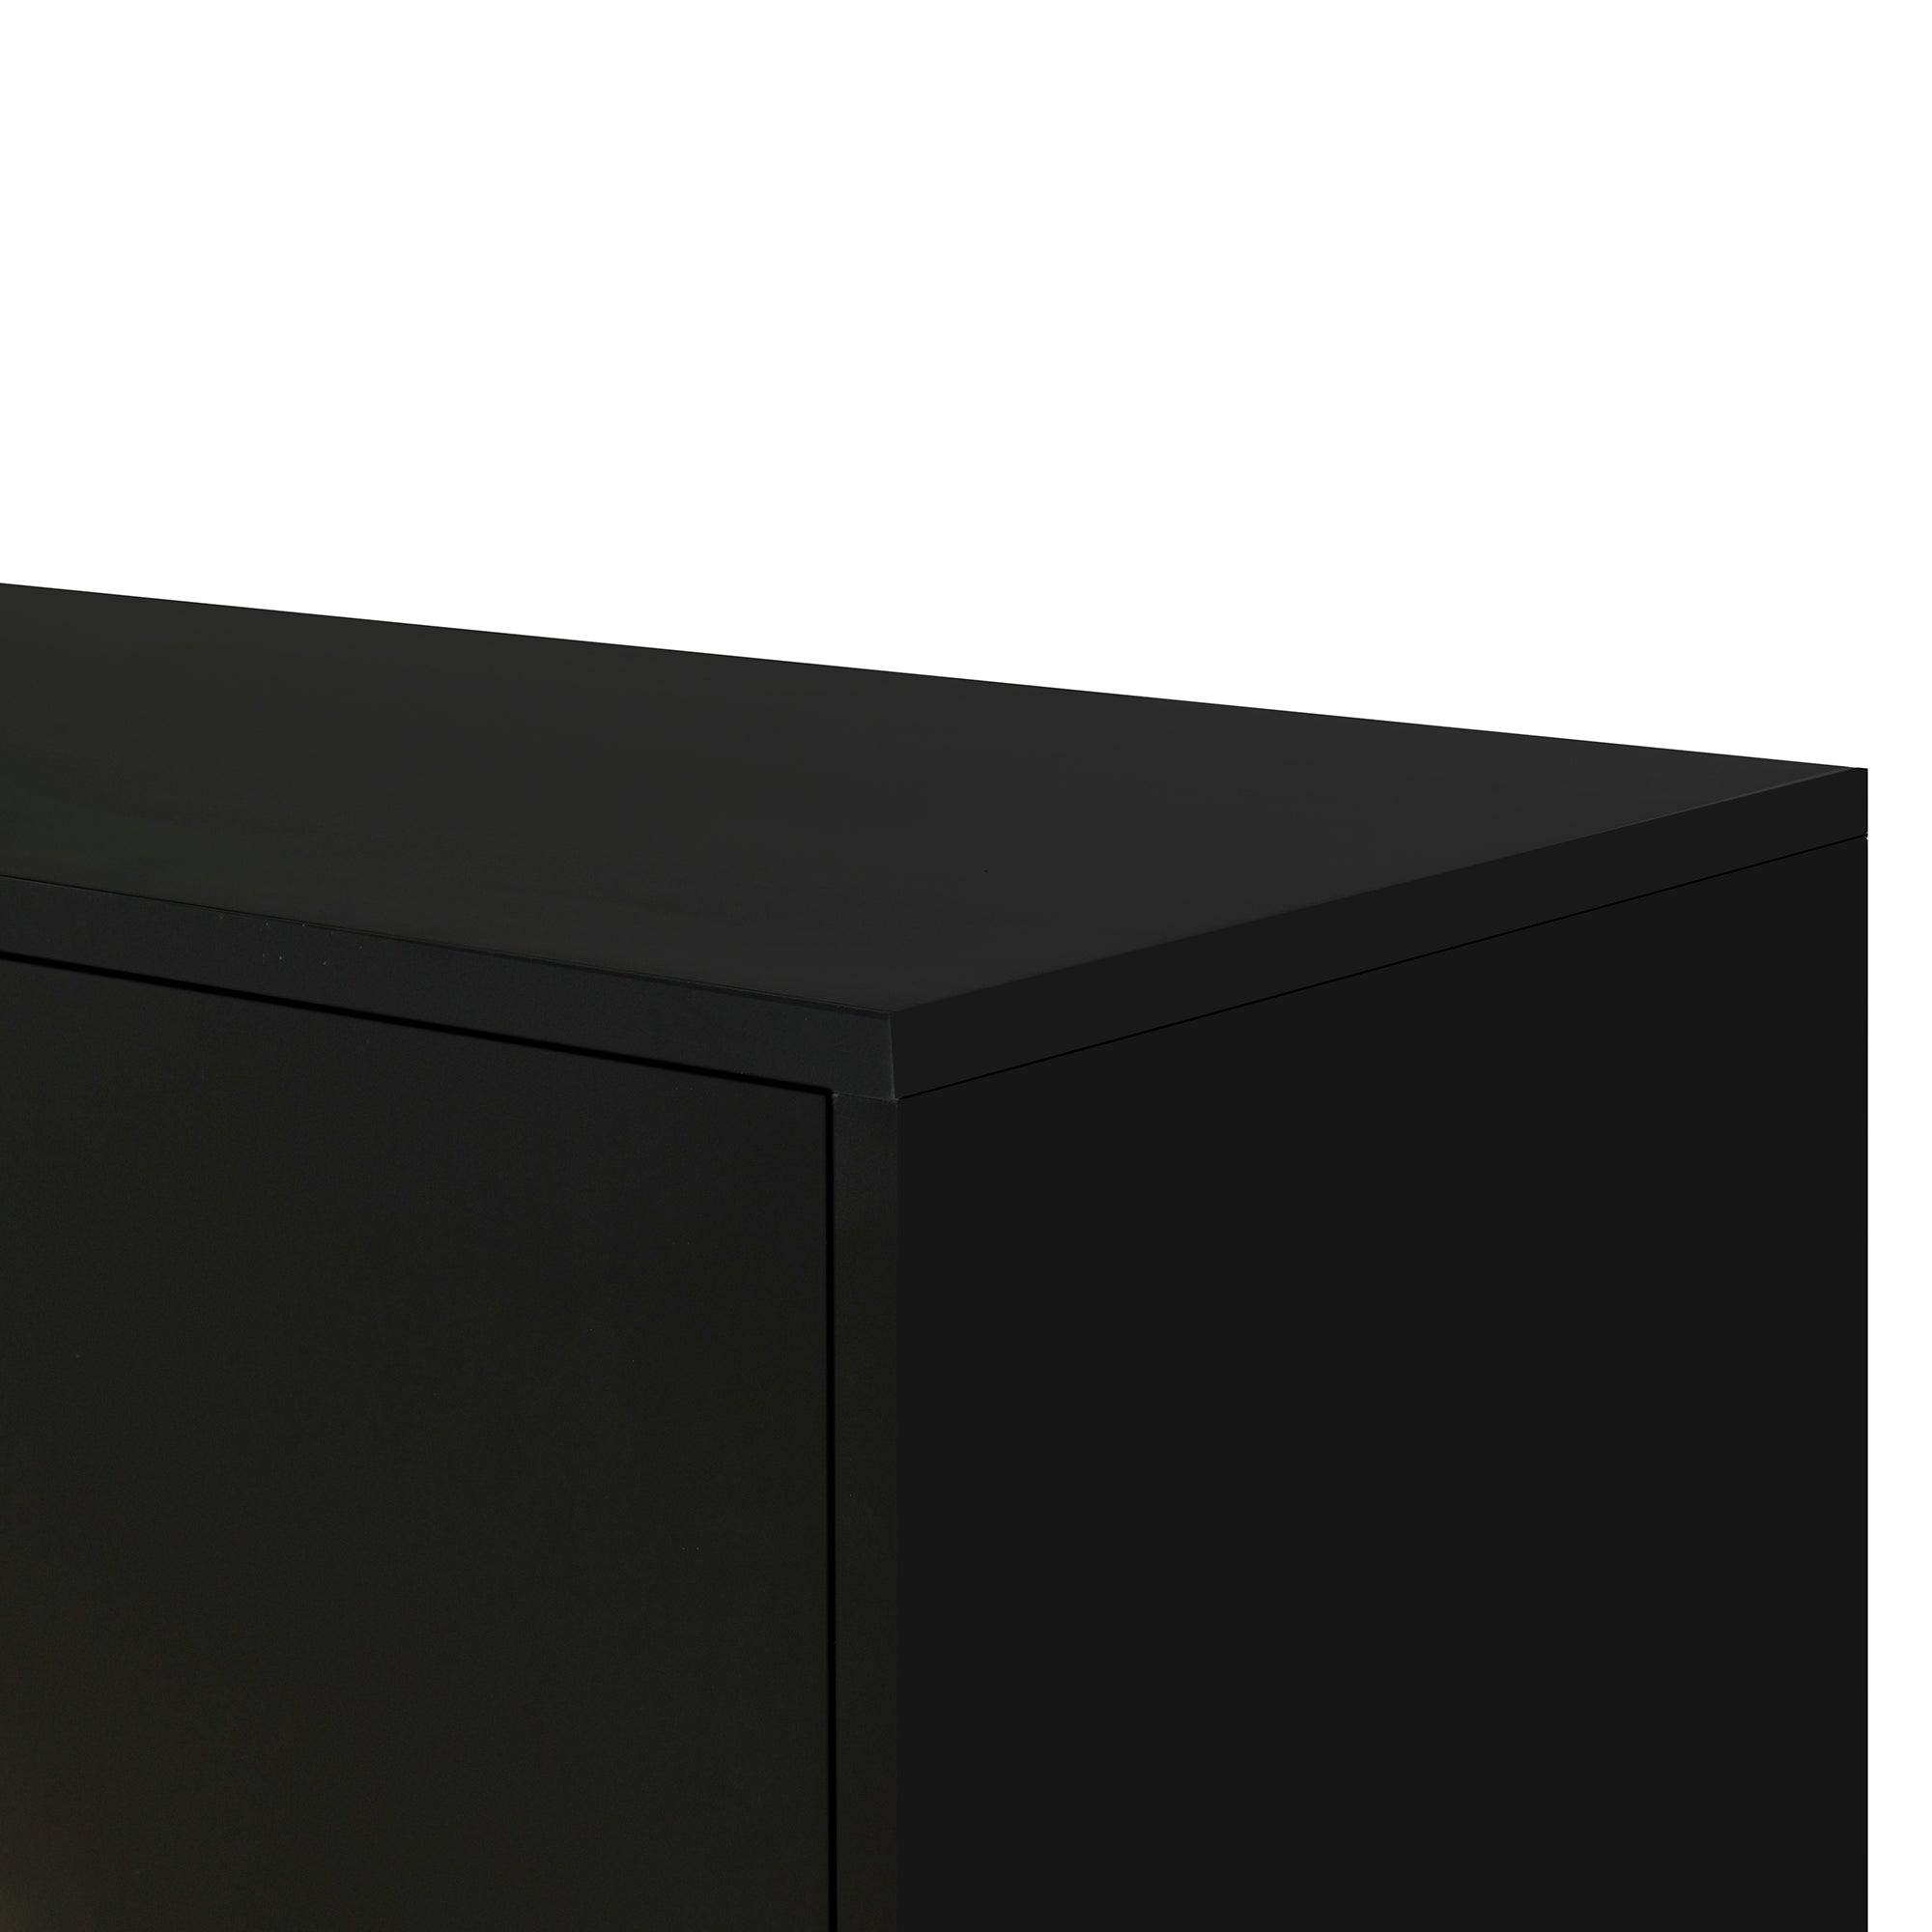 U Style Four Door Metal Handle Storage Cabinet black-solid wood+mdf